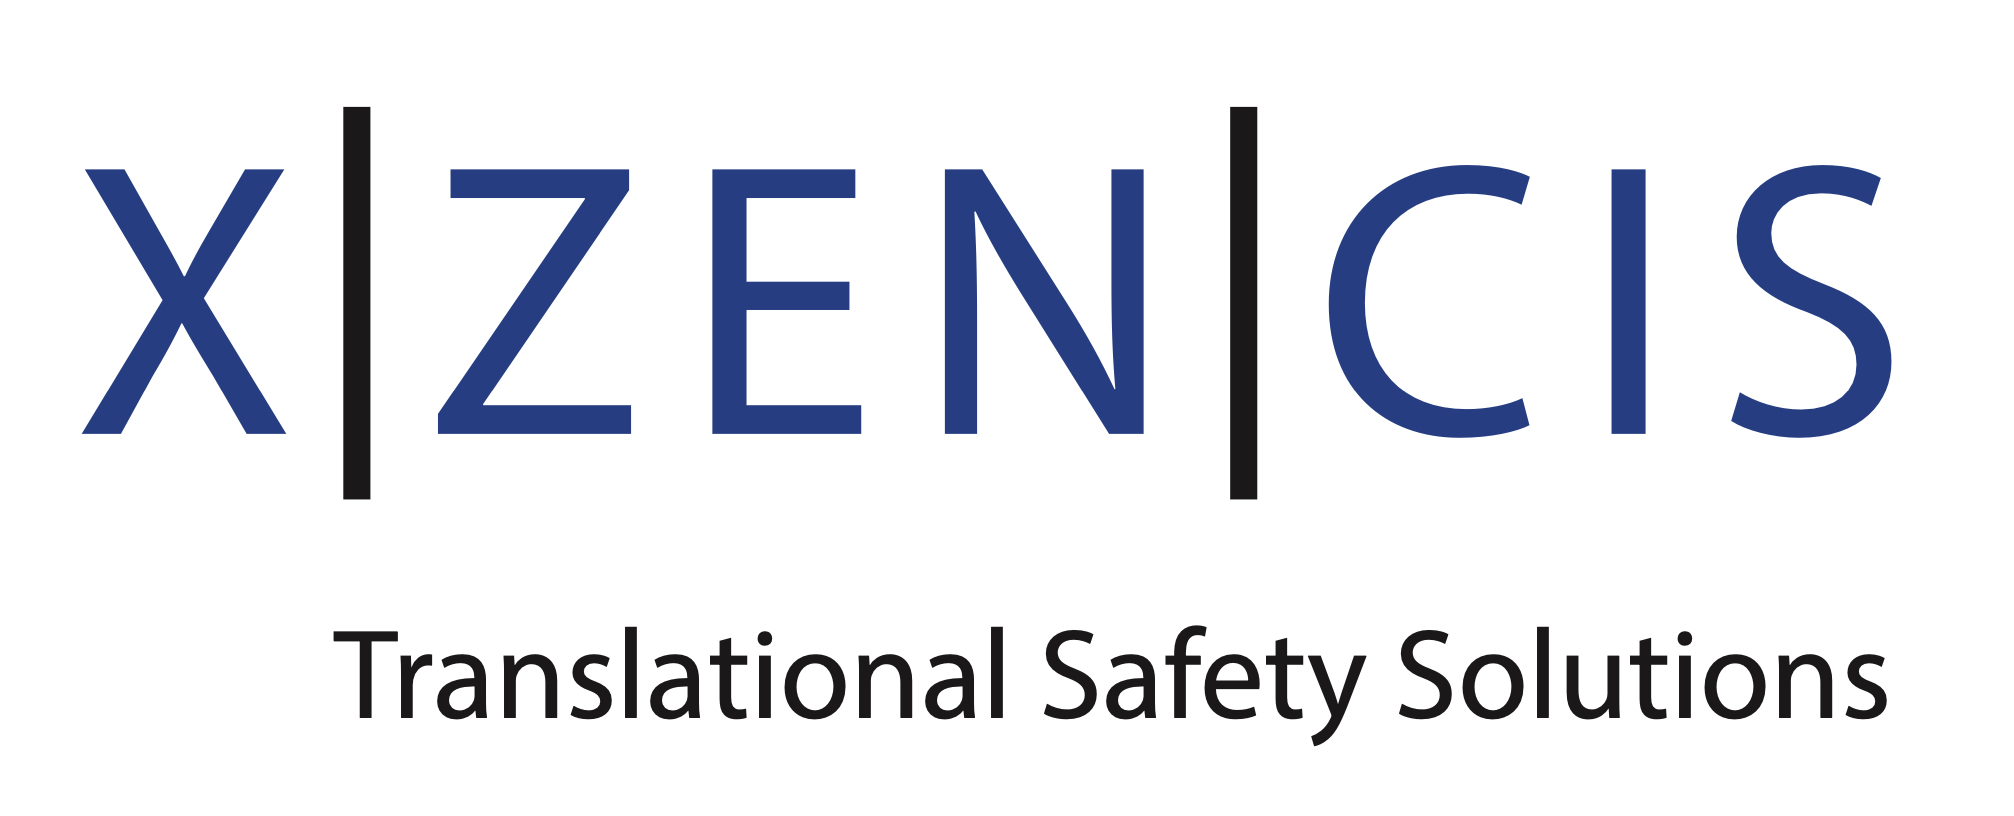 Xzencis participates in De-risking Drug Development Webinar